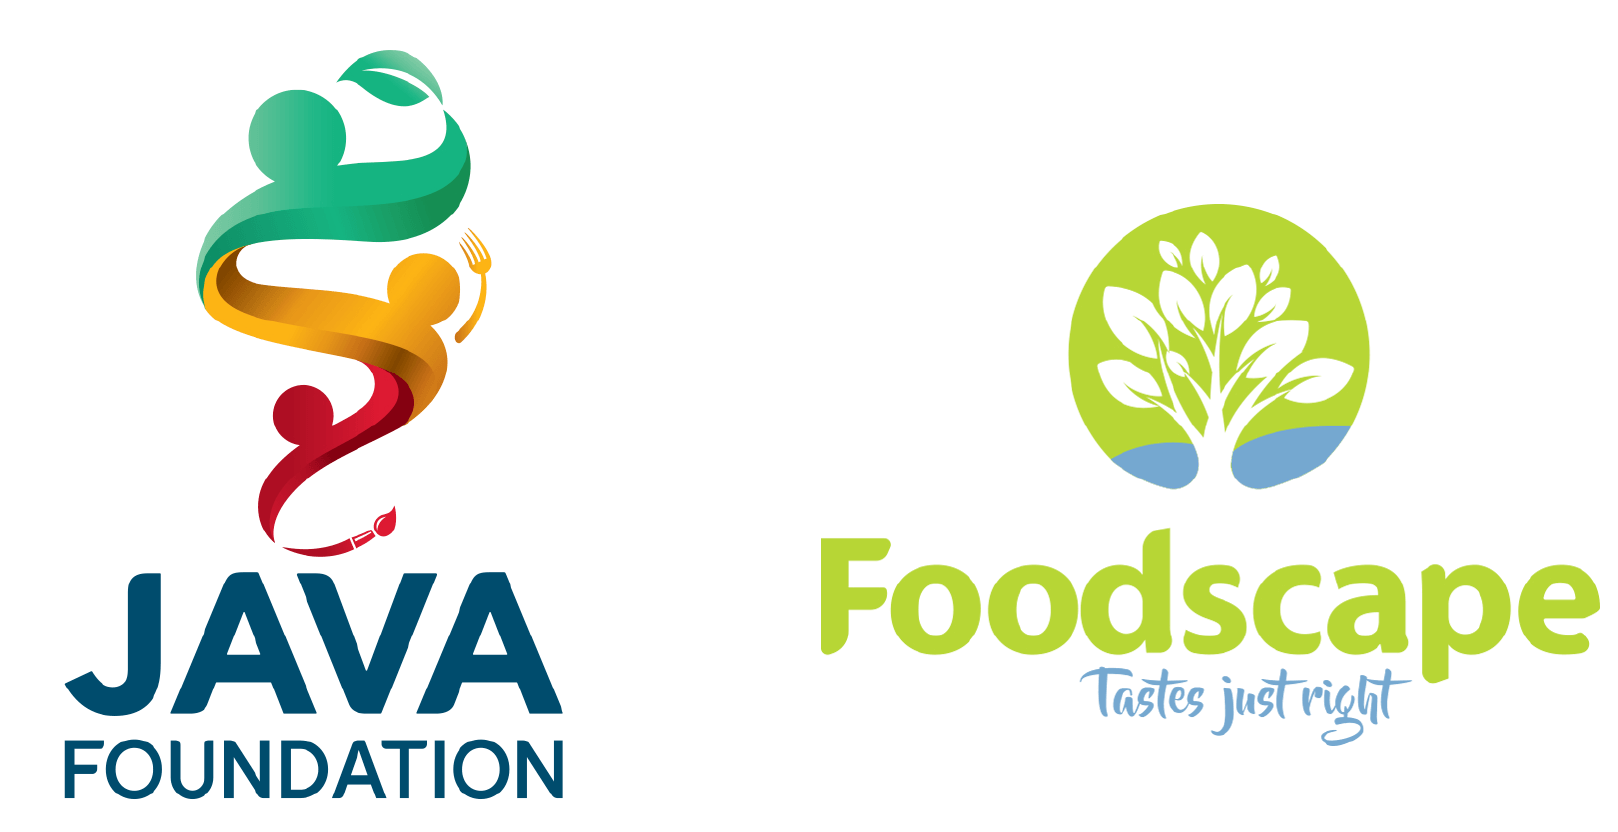 Java Foundation & Foodscape